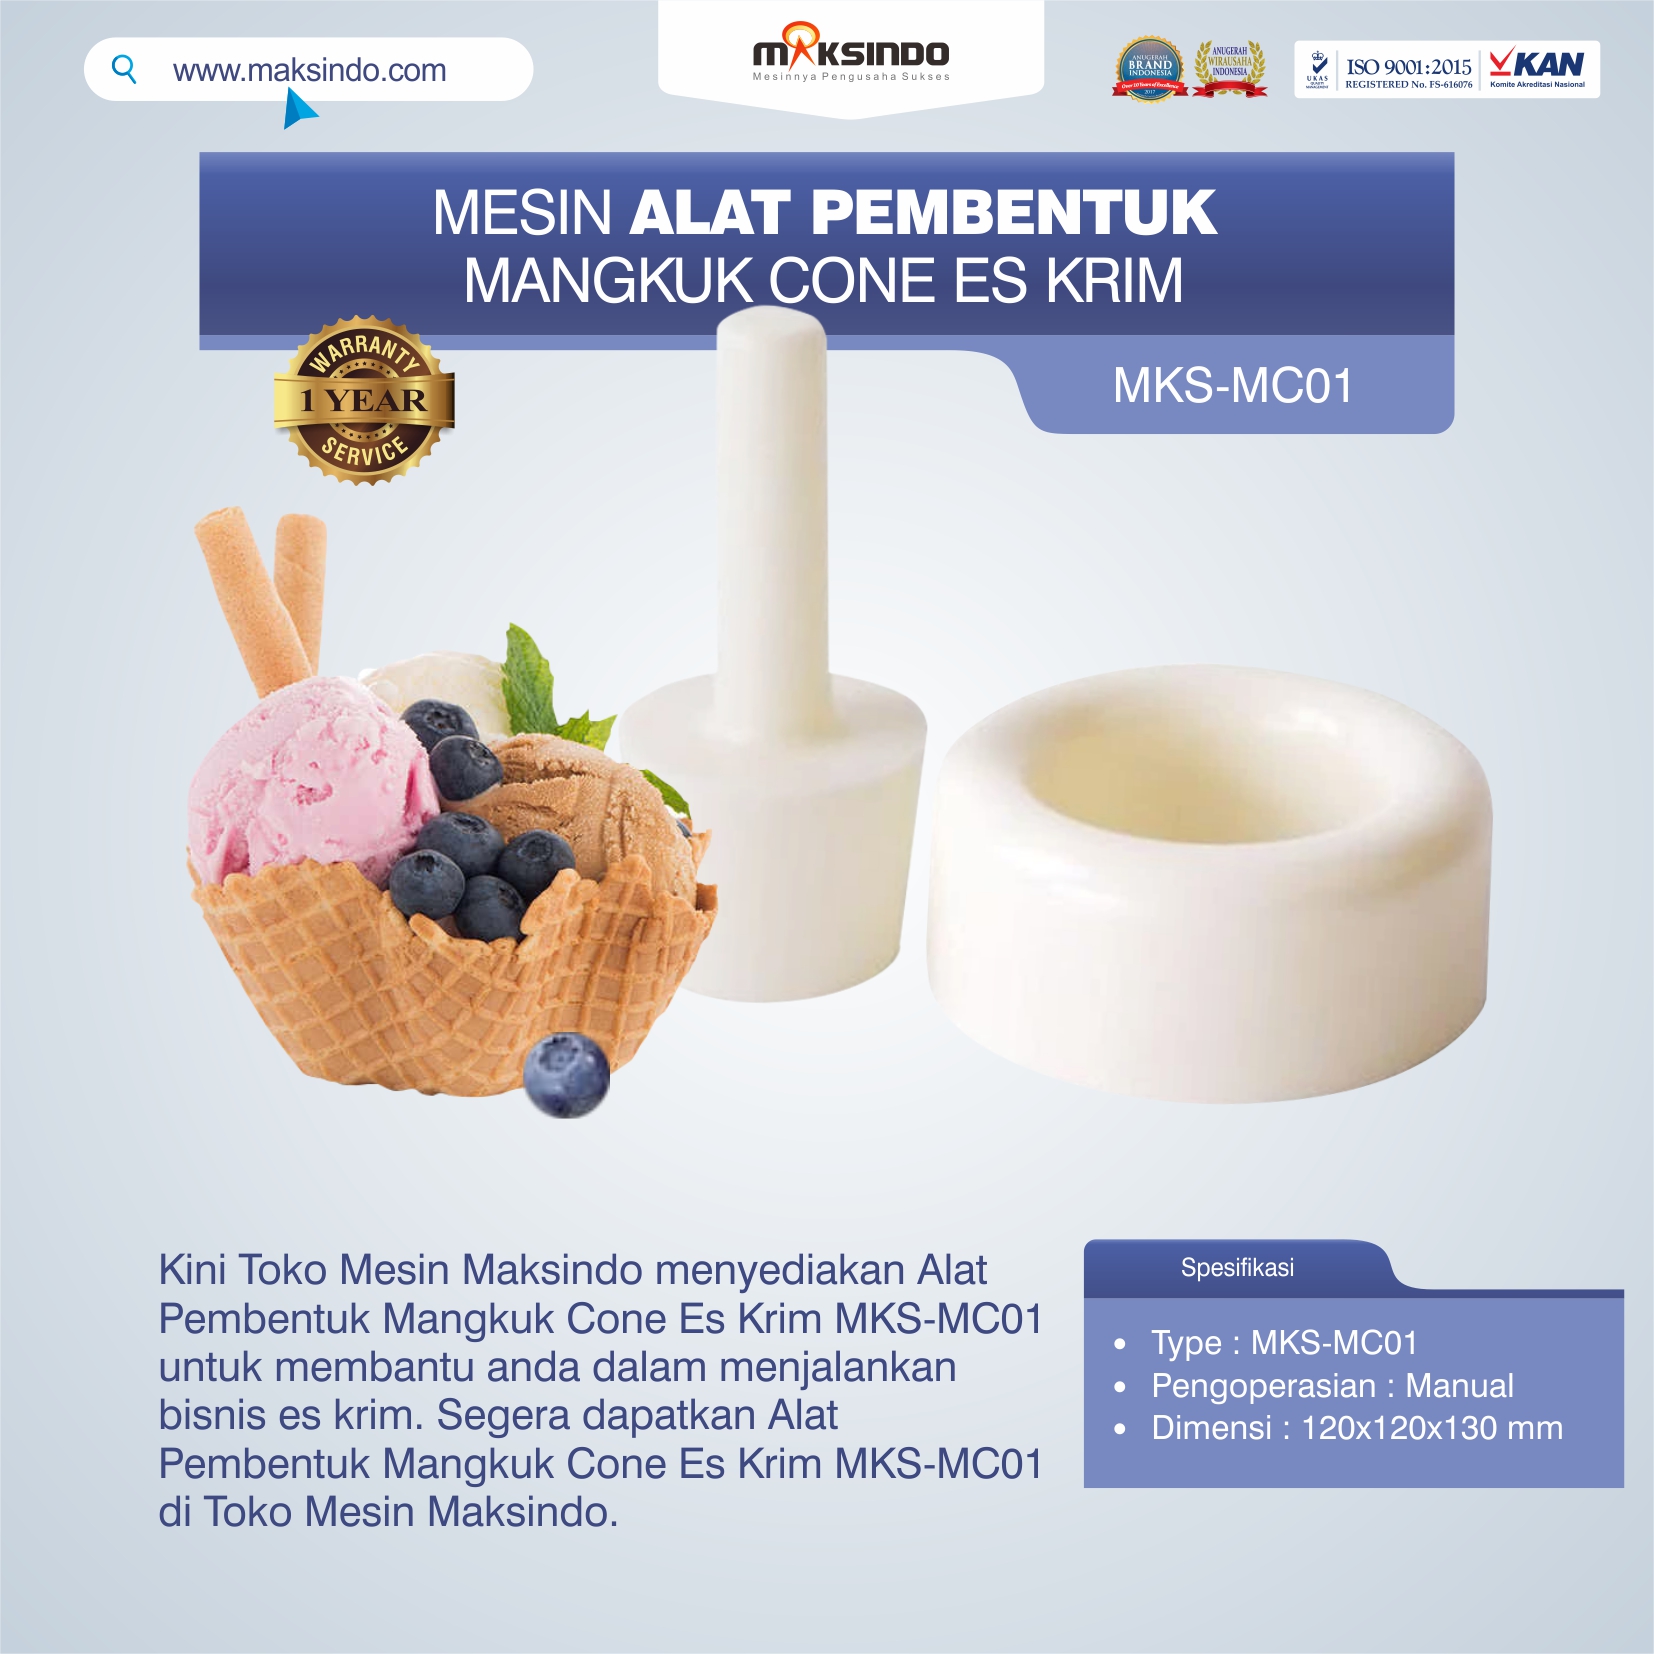 Jual Alat Pembentuk Mangkuk Cone Es Krim MKS-MC01 di Tangerang